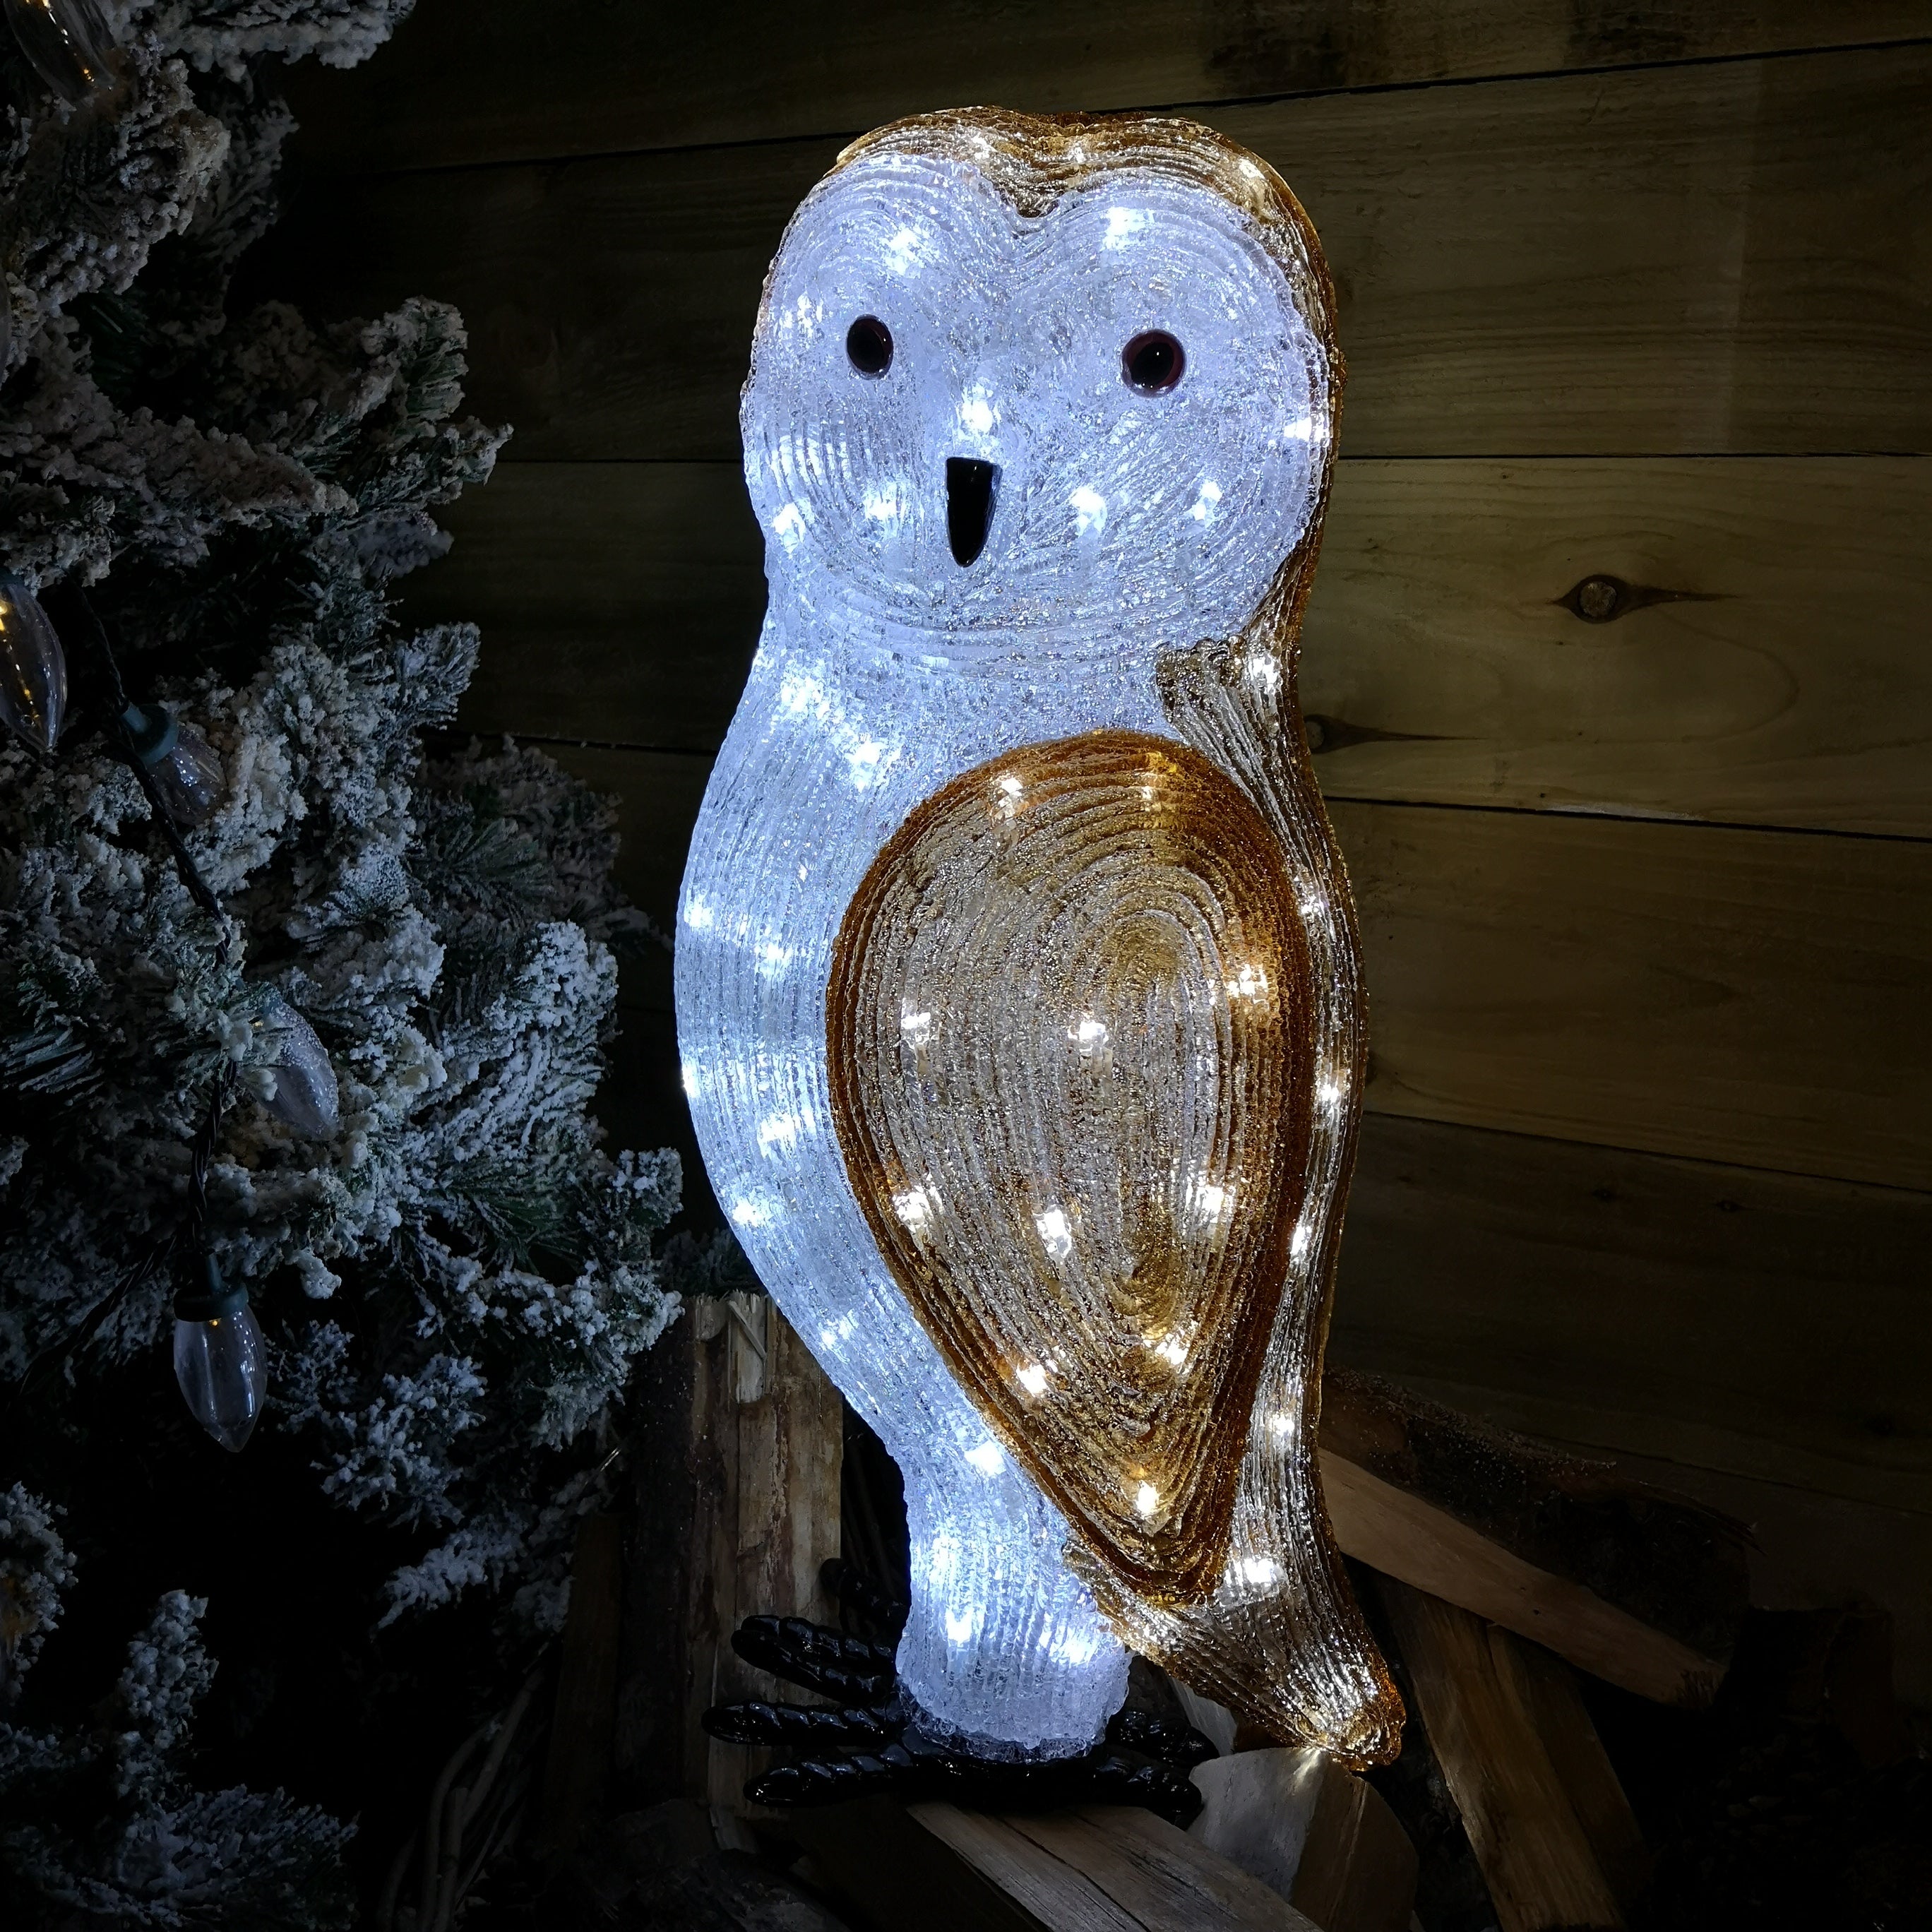 56cm The Snowman & Snowdog 2018 Acrylic Owl Christmas Decoration with 100 Ice White LEDs